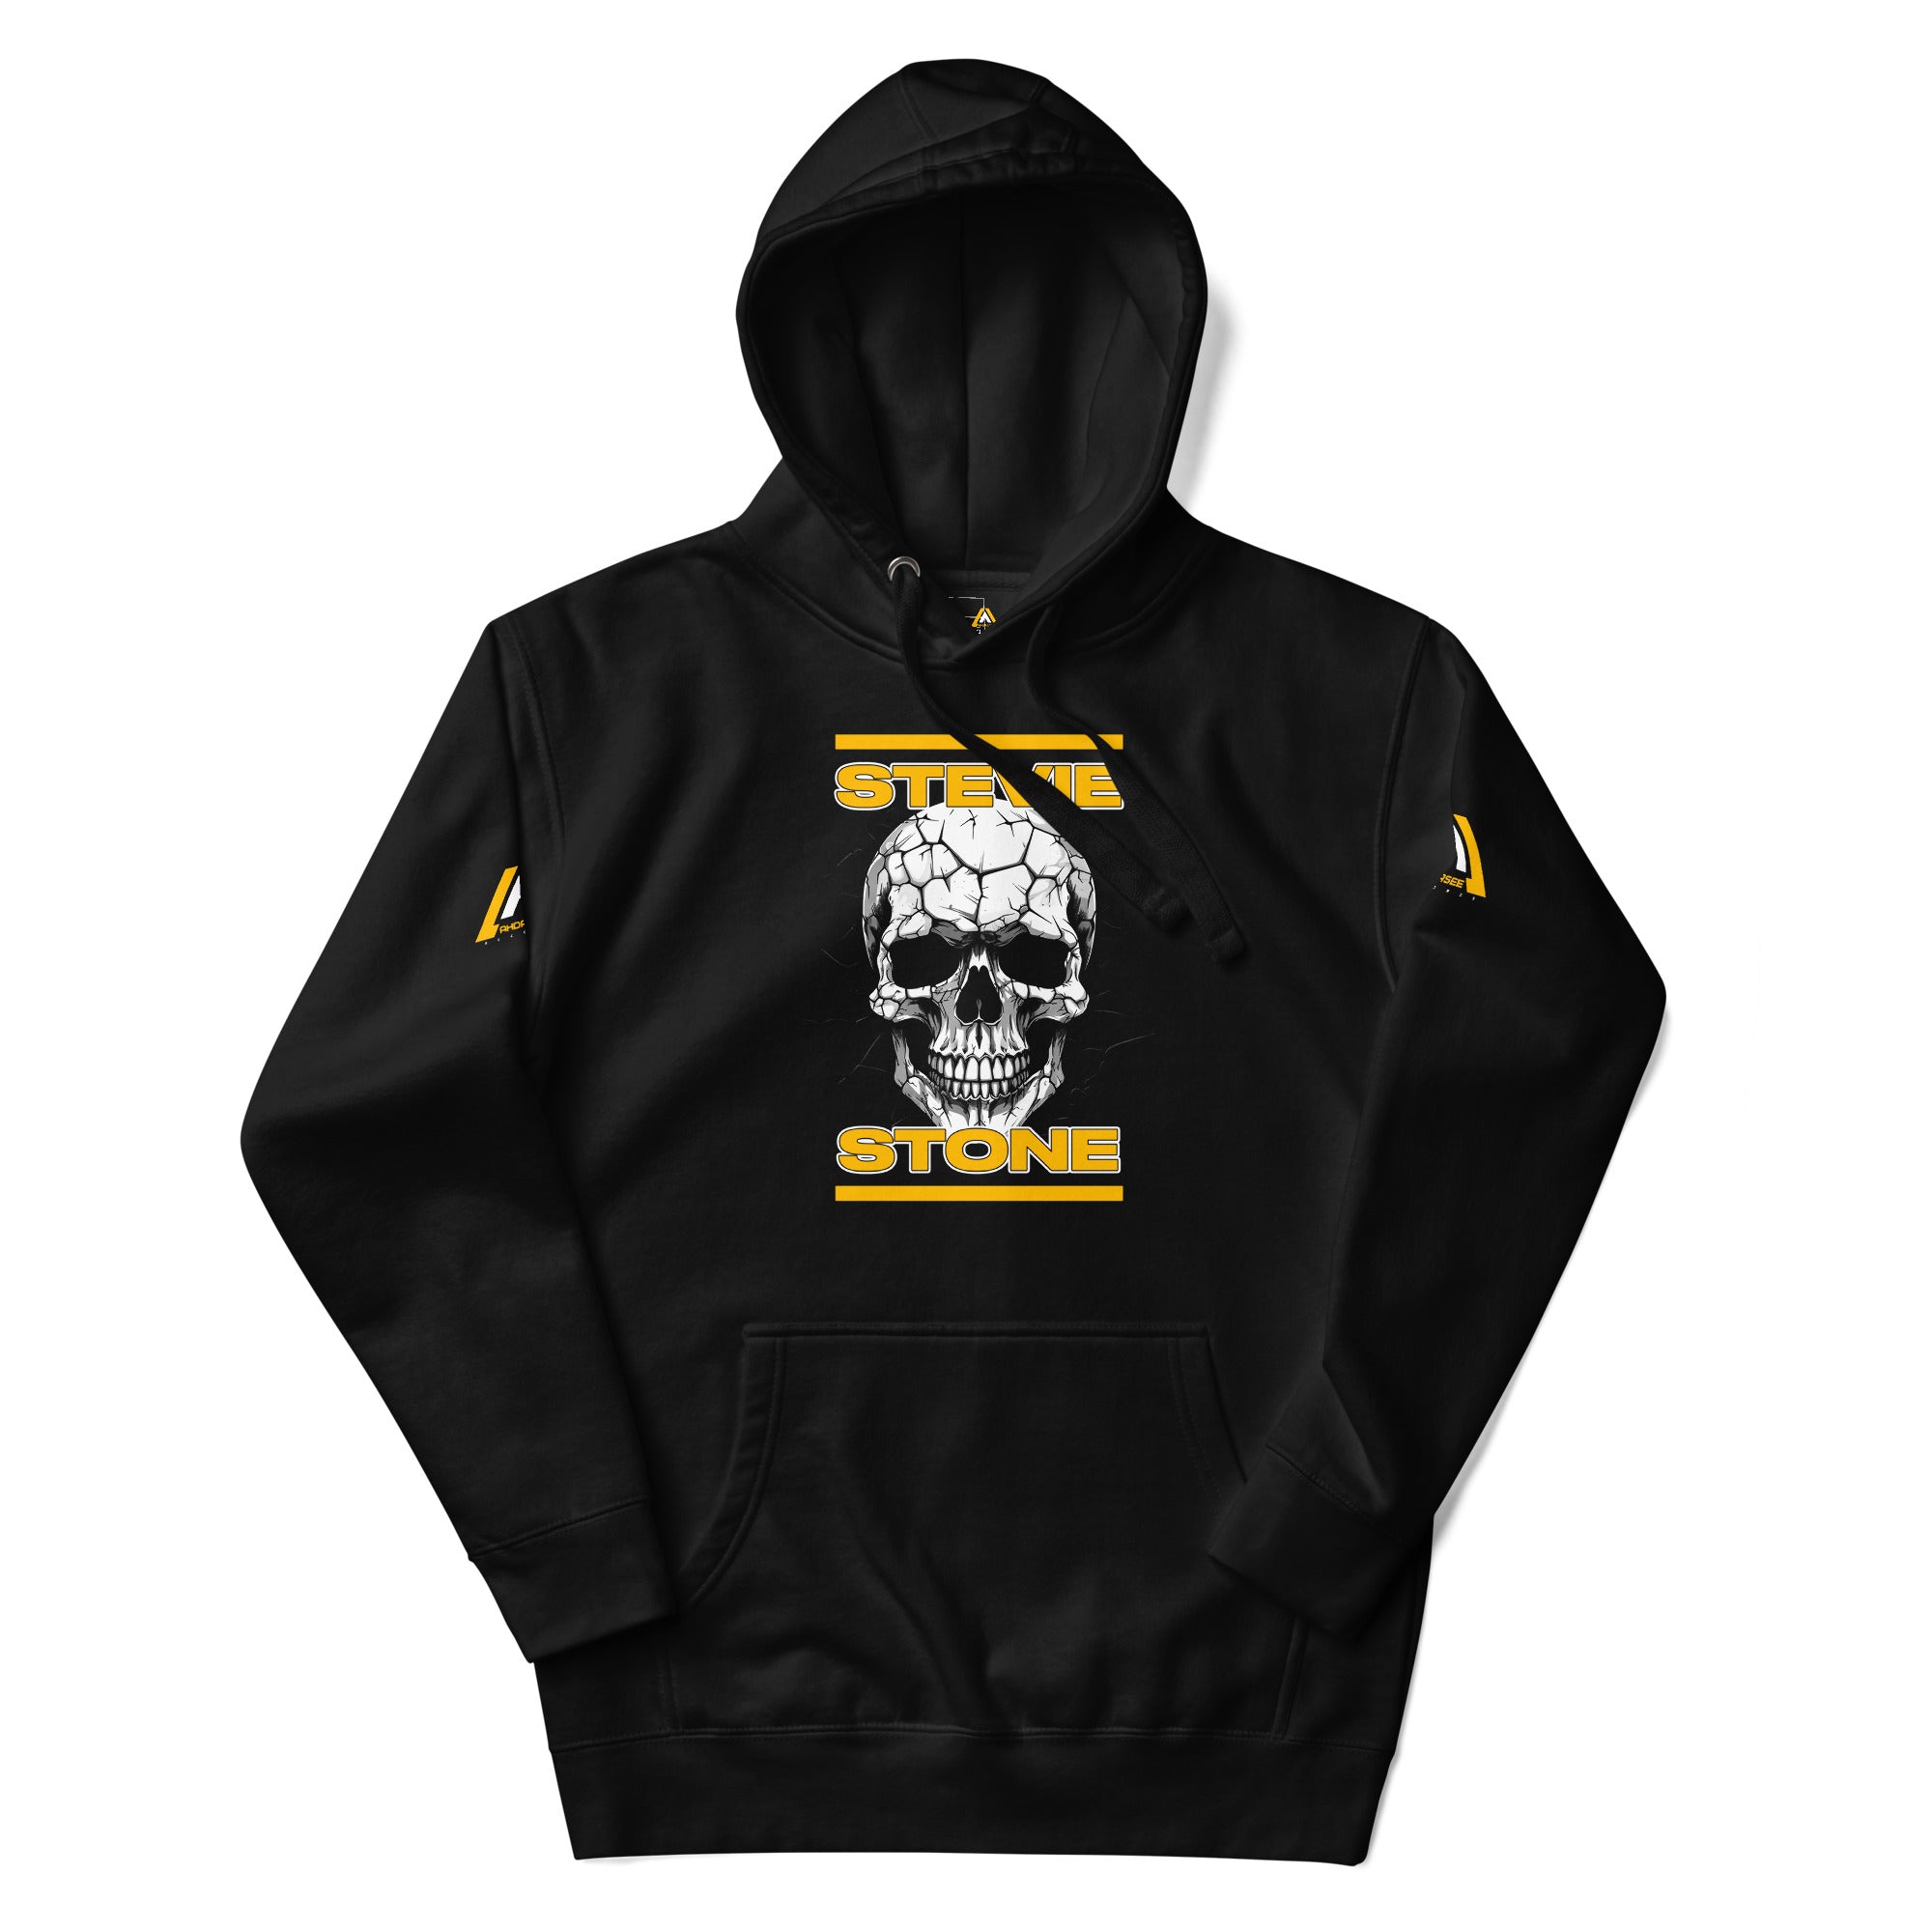 Stevie Stone Skull Unisex Hoodie (Black, White, Yellow)